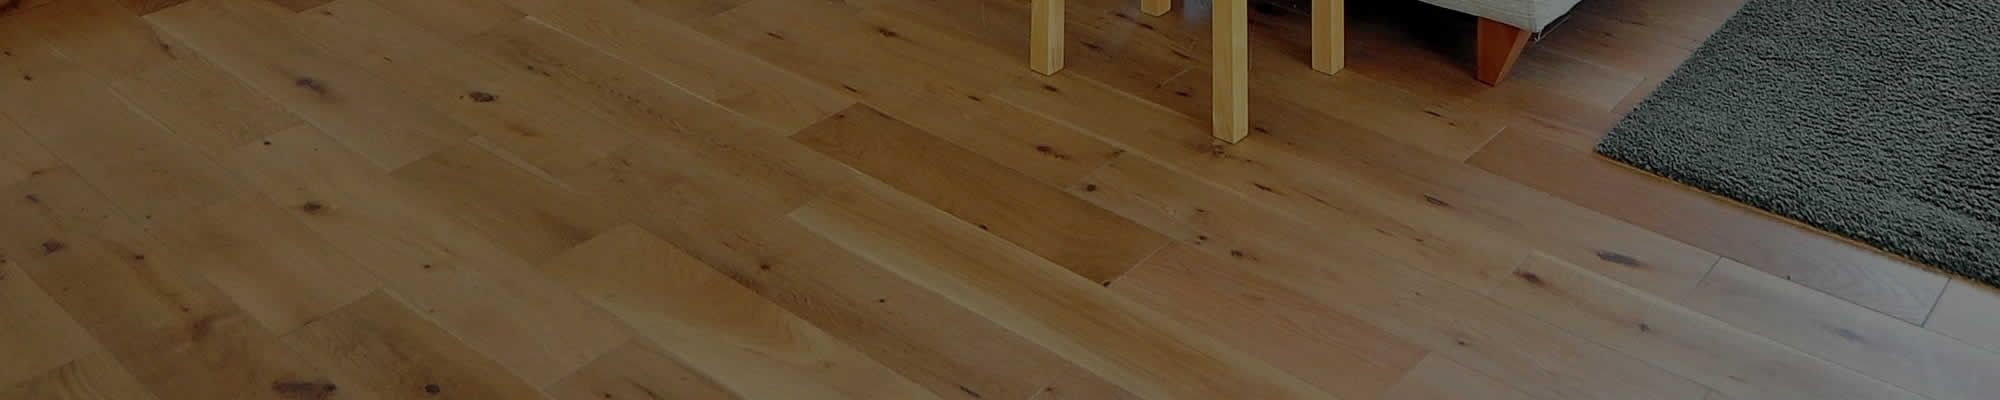 Hardwood Floor Resurfacing Brookfield WI